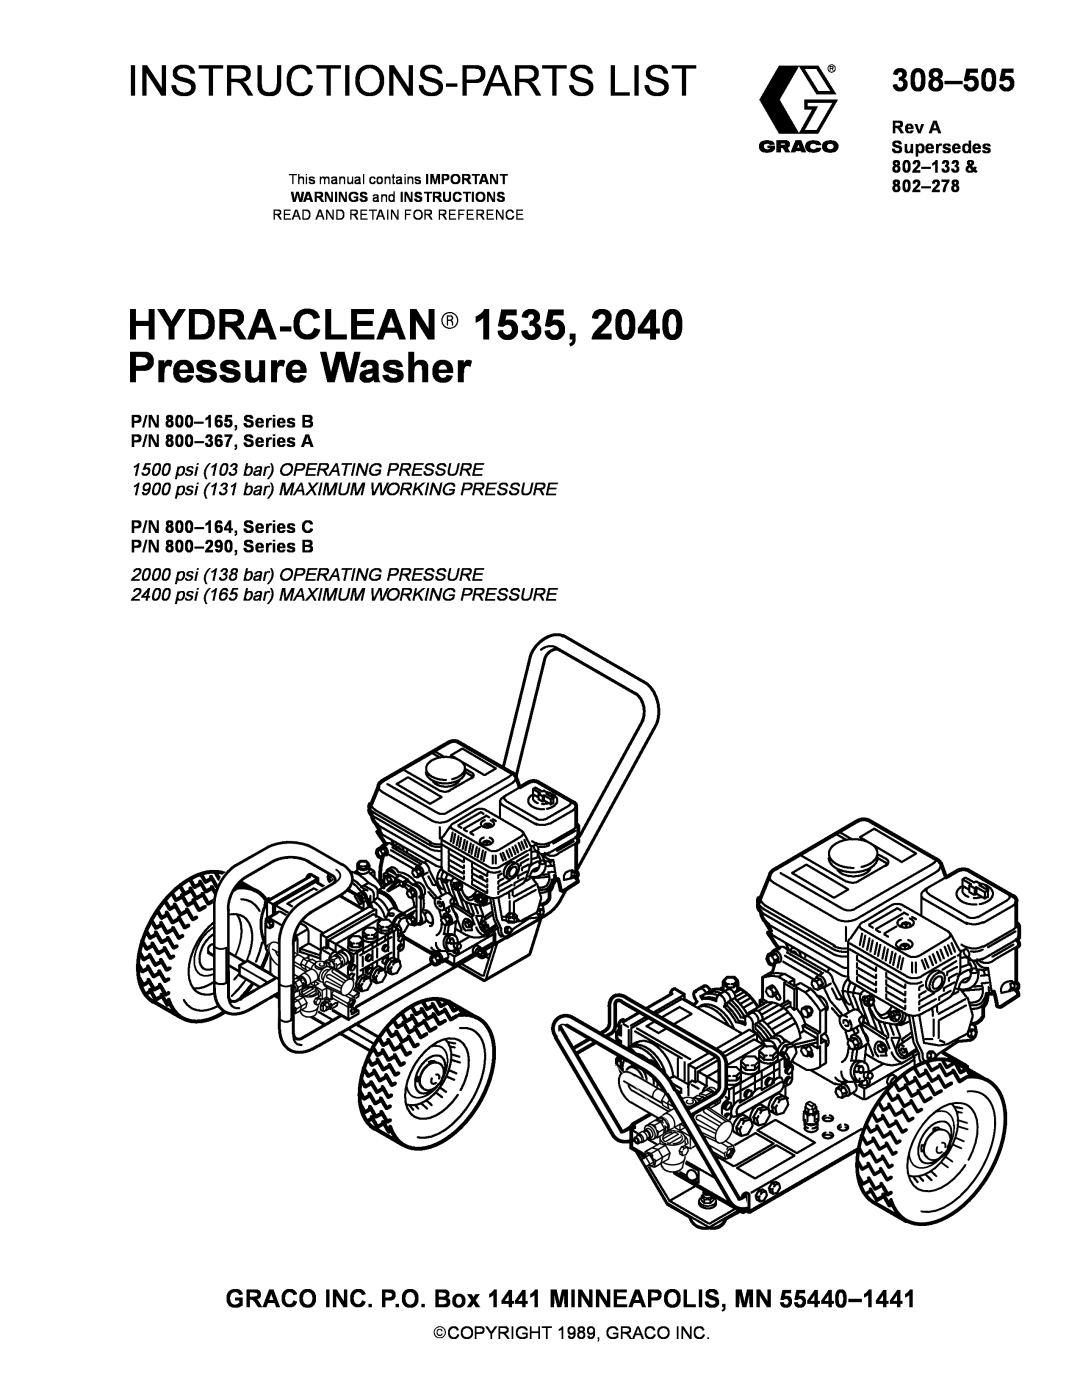 Graco Inc 800-290 manual Rev A Supersedes, P/N 800-165, Series B P/N 800-367, Series A, Instructions-Parts List, 308-505 